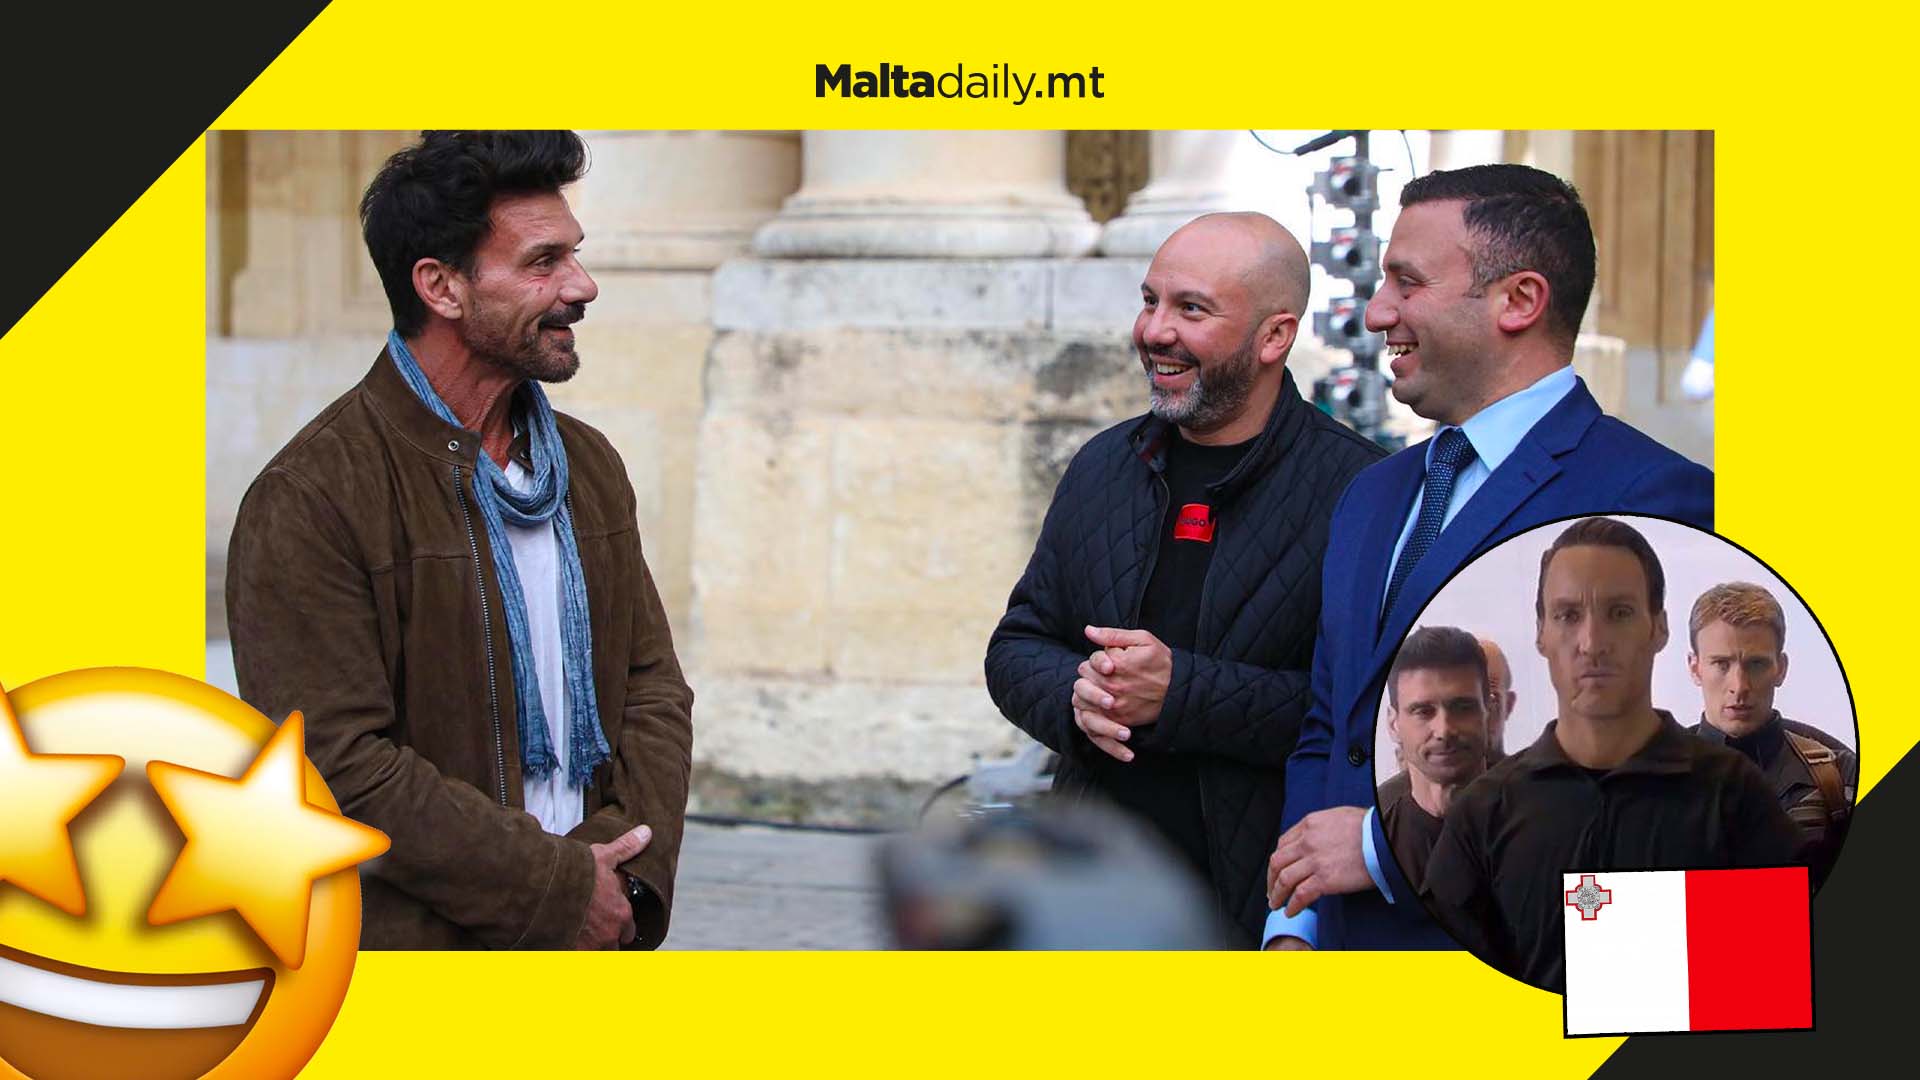 Exclusive: Marvel actor Frank Grillo in Malta filming new movie